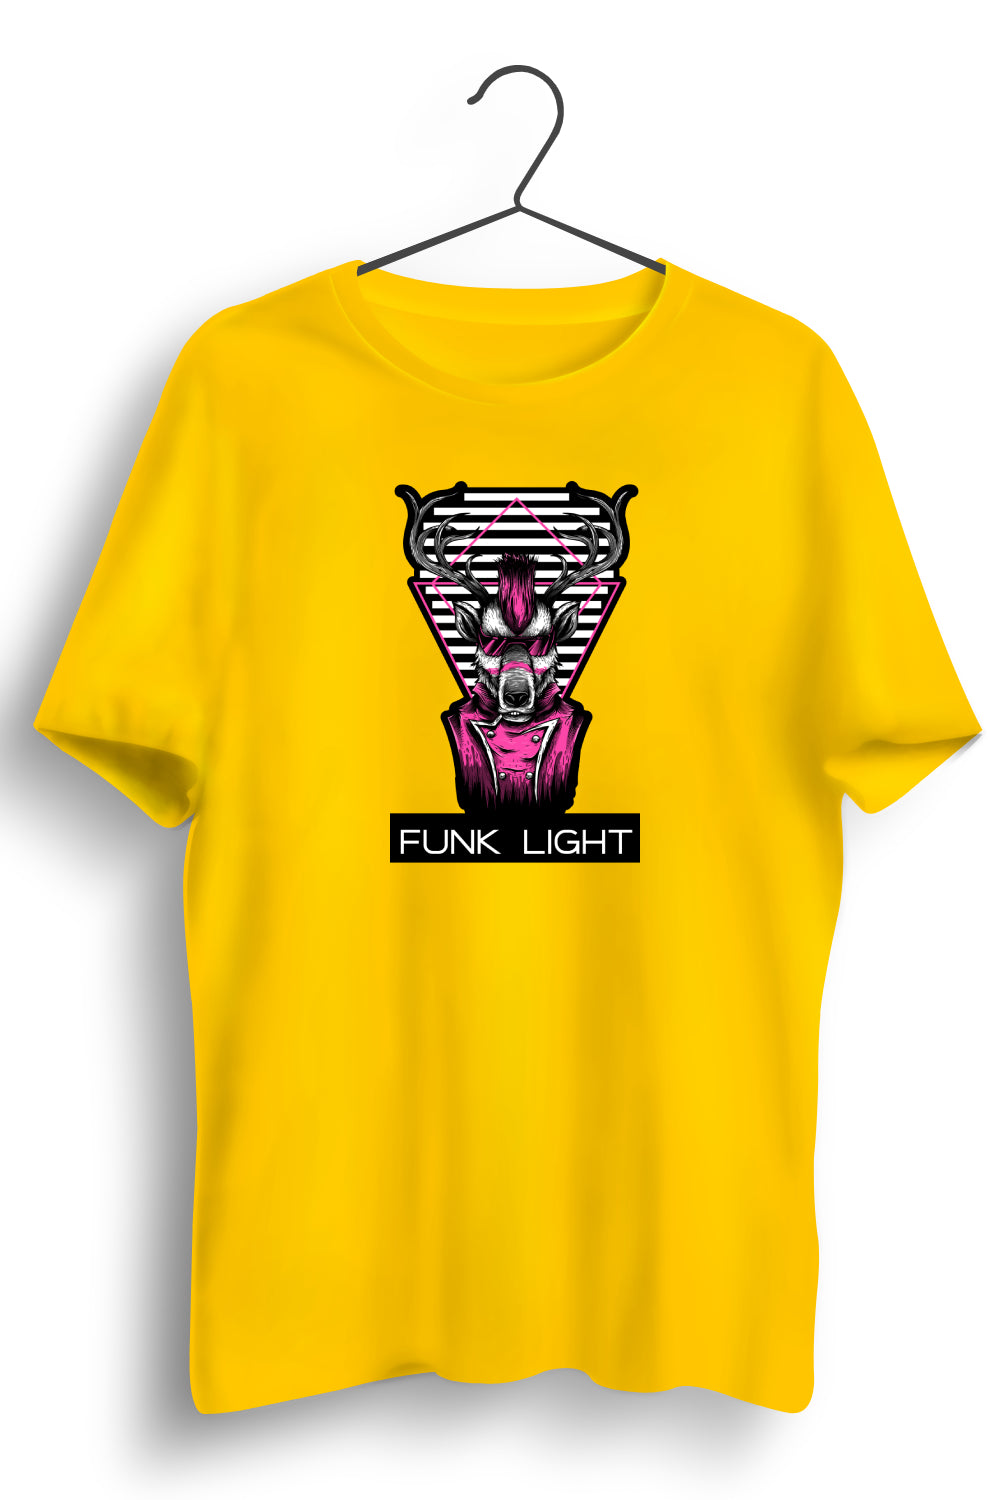 Funk Light Graphic Printed Yellow Tshirt